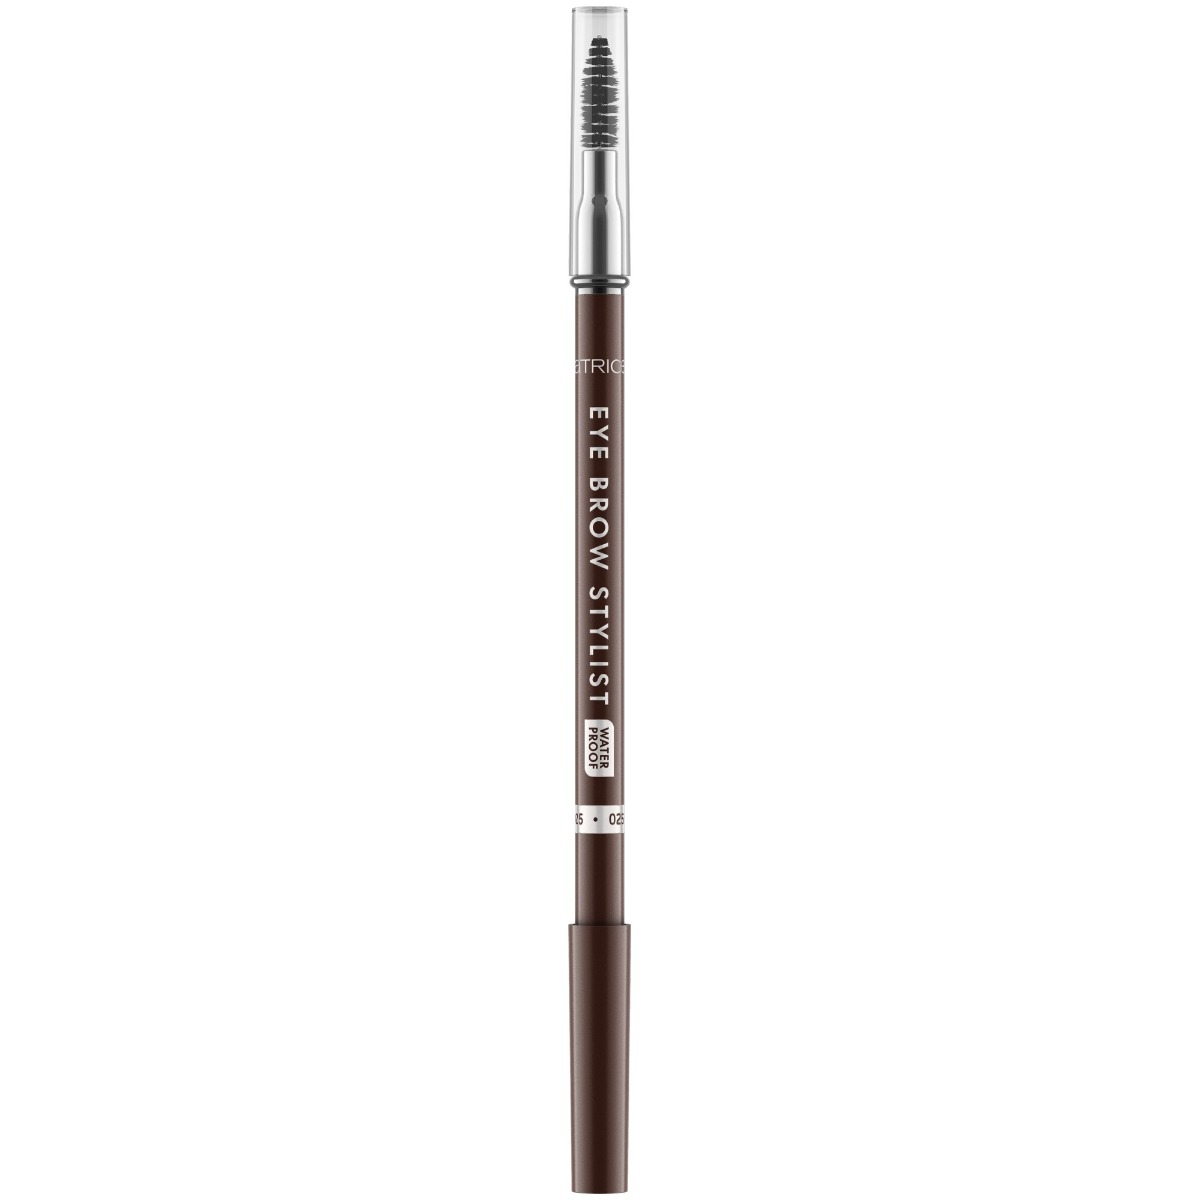 Creion de sprancene Eye Brow Stylist 025 - Perfect Brown, 1.4g, Catrice